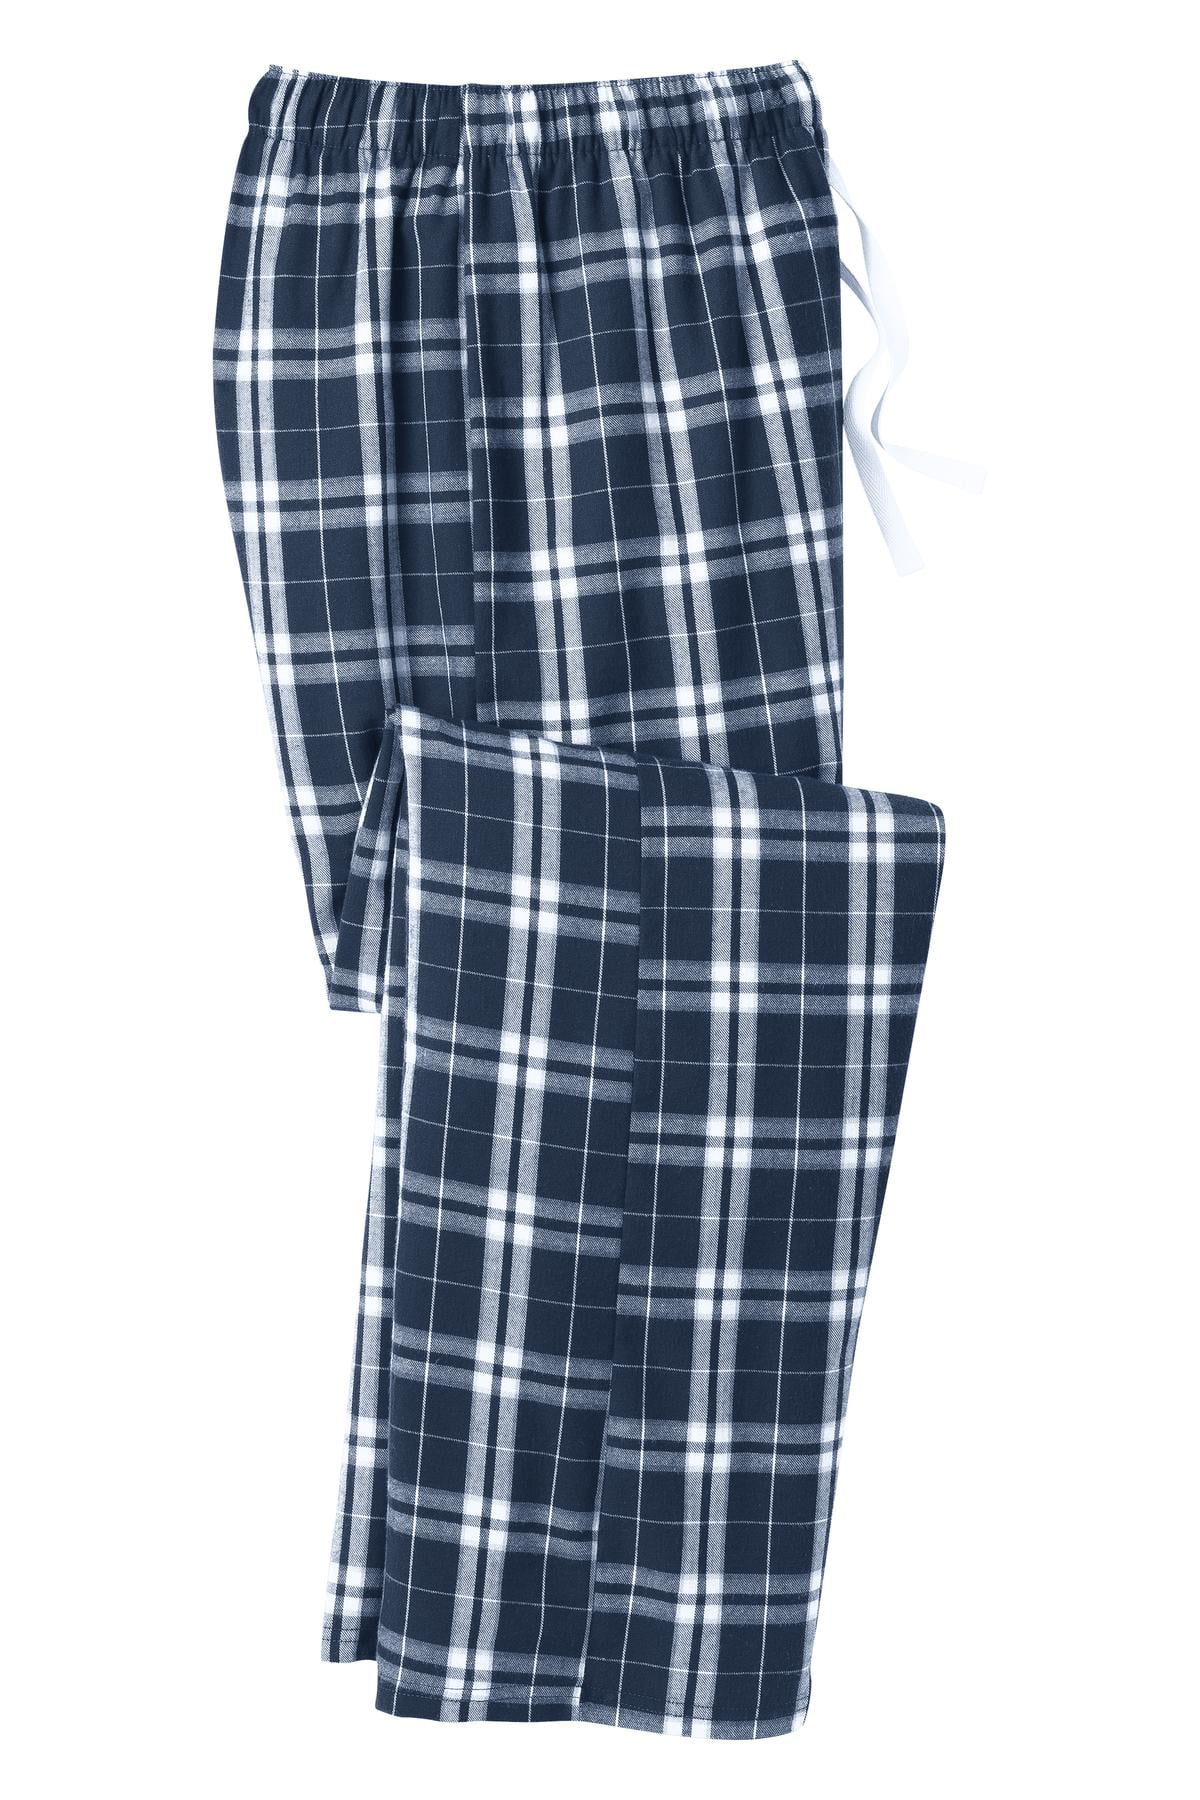 Flannel Short PJ Set - Windowpane Plaid True Navy - Eberjey